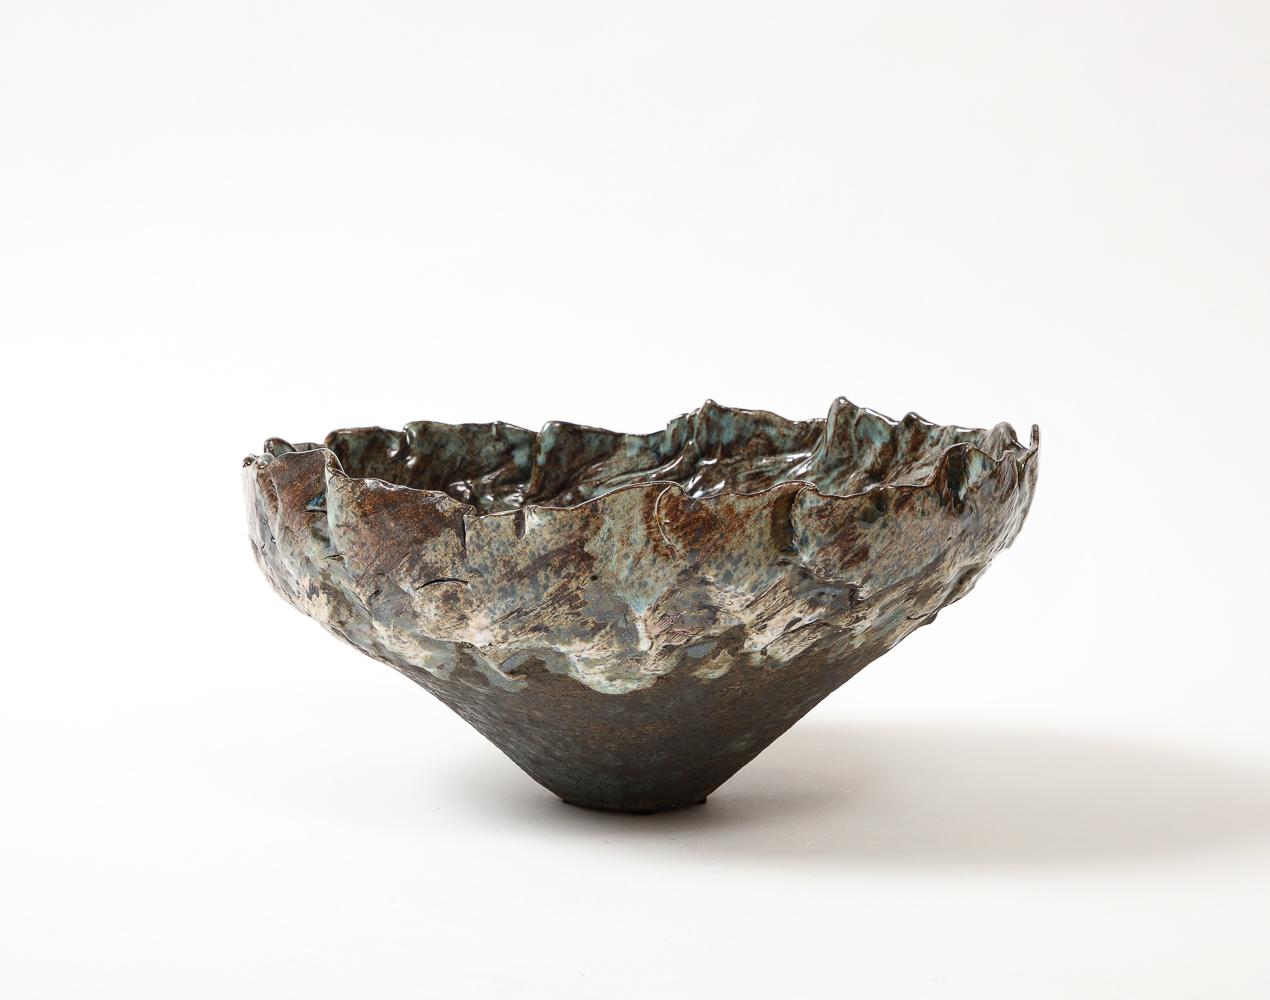 Glazed ceramic. Hand-built ceramic bowl with blue glazes. Artist signed on underside.